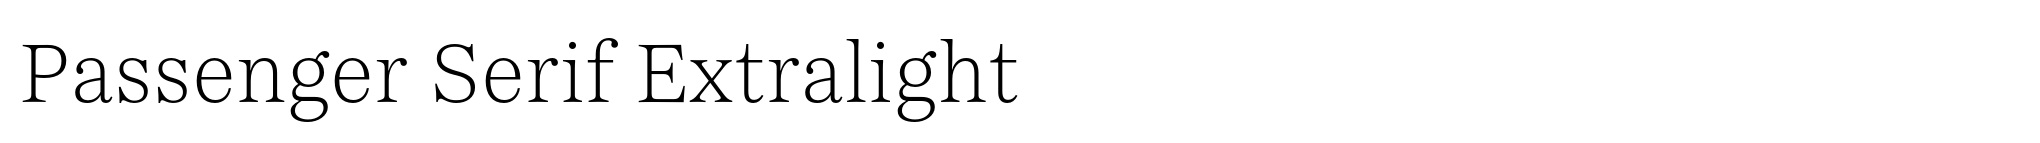 Passenger Serif Extralight image